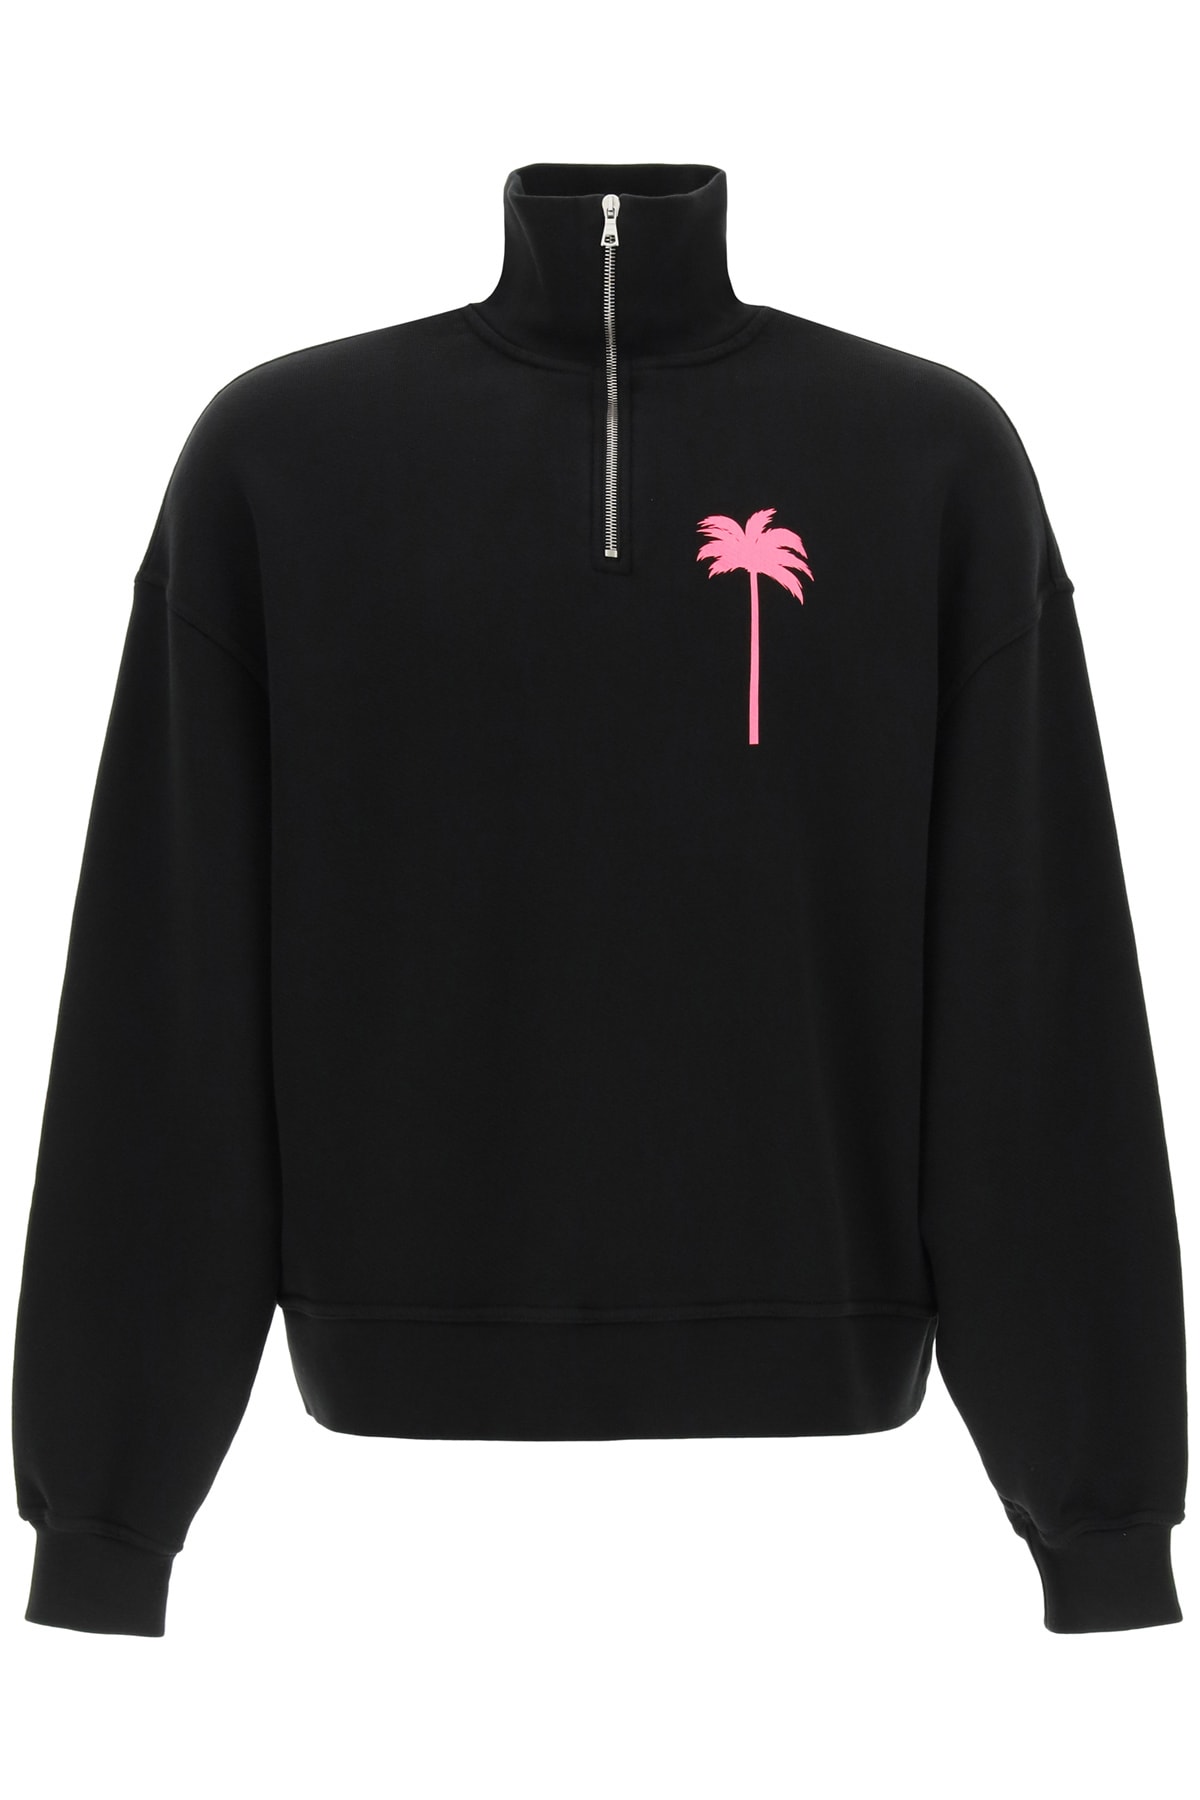 Palm Angels Sweatshirt With Neon Palm Tree Print